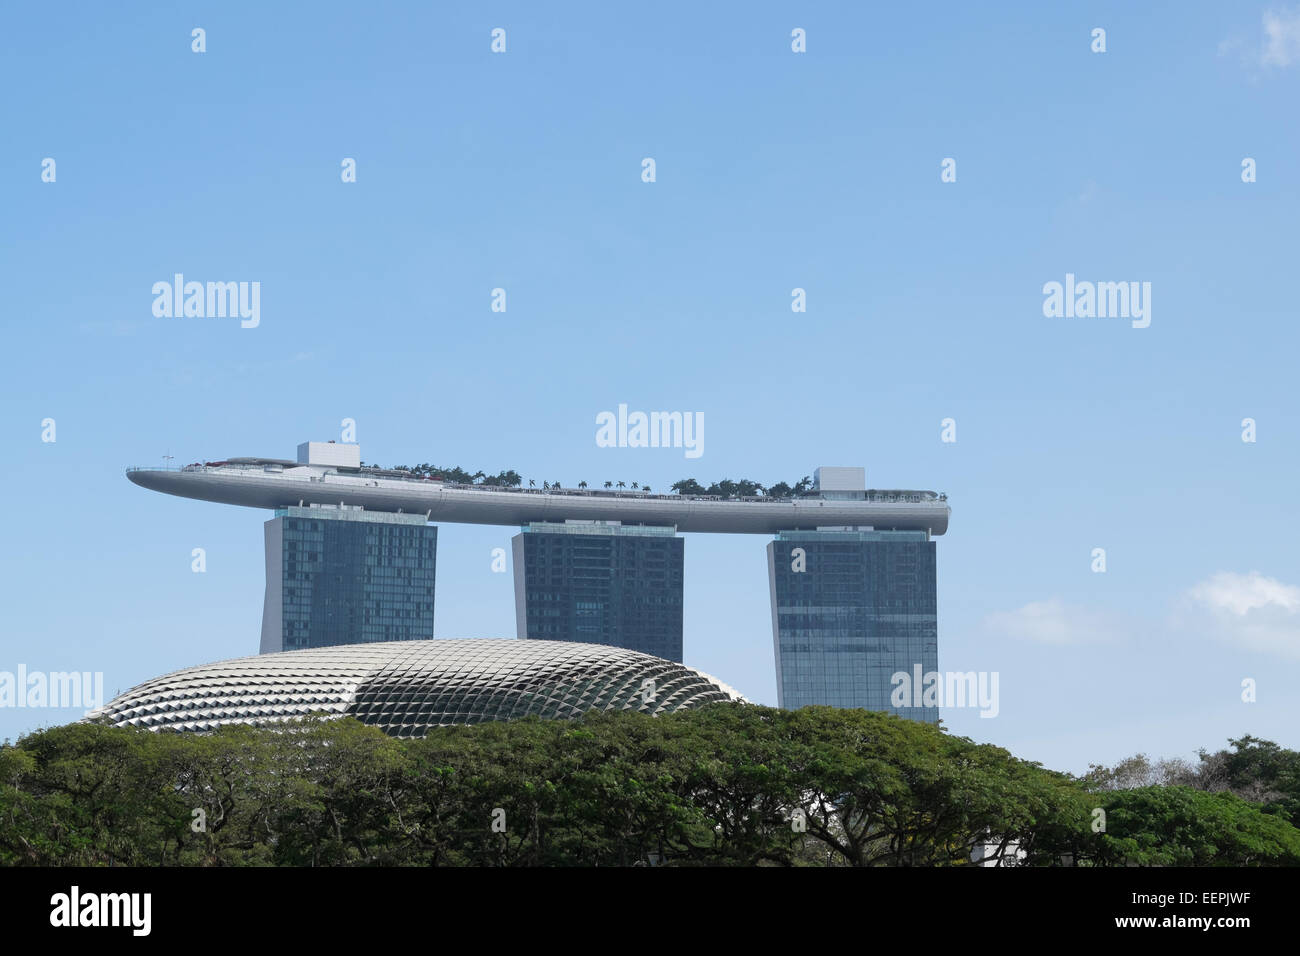 Marina Bay Sands Hotel and Casino, à Singapour. Banque D'Images